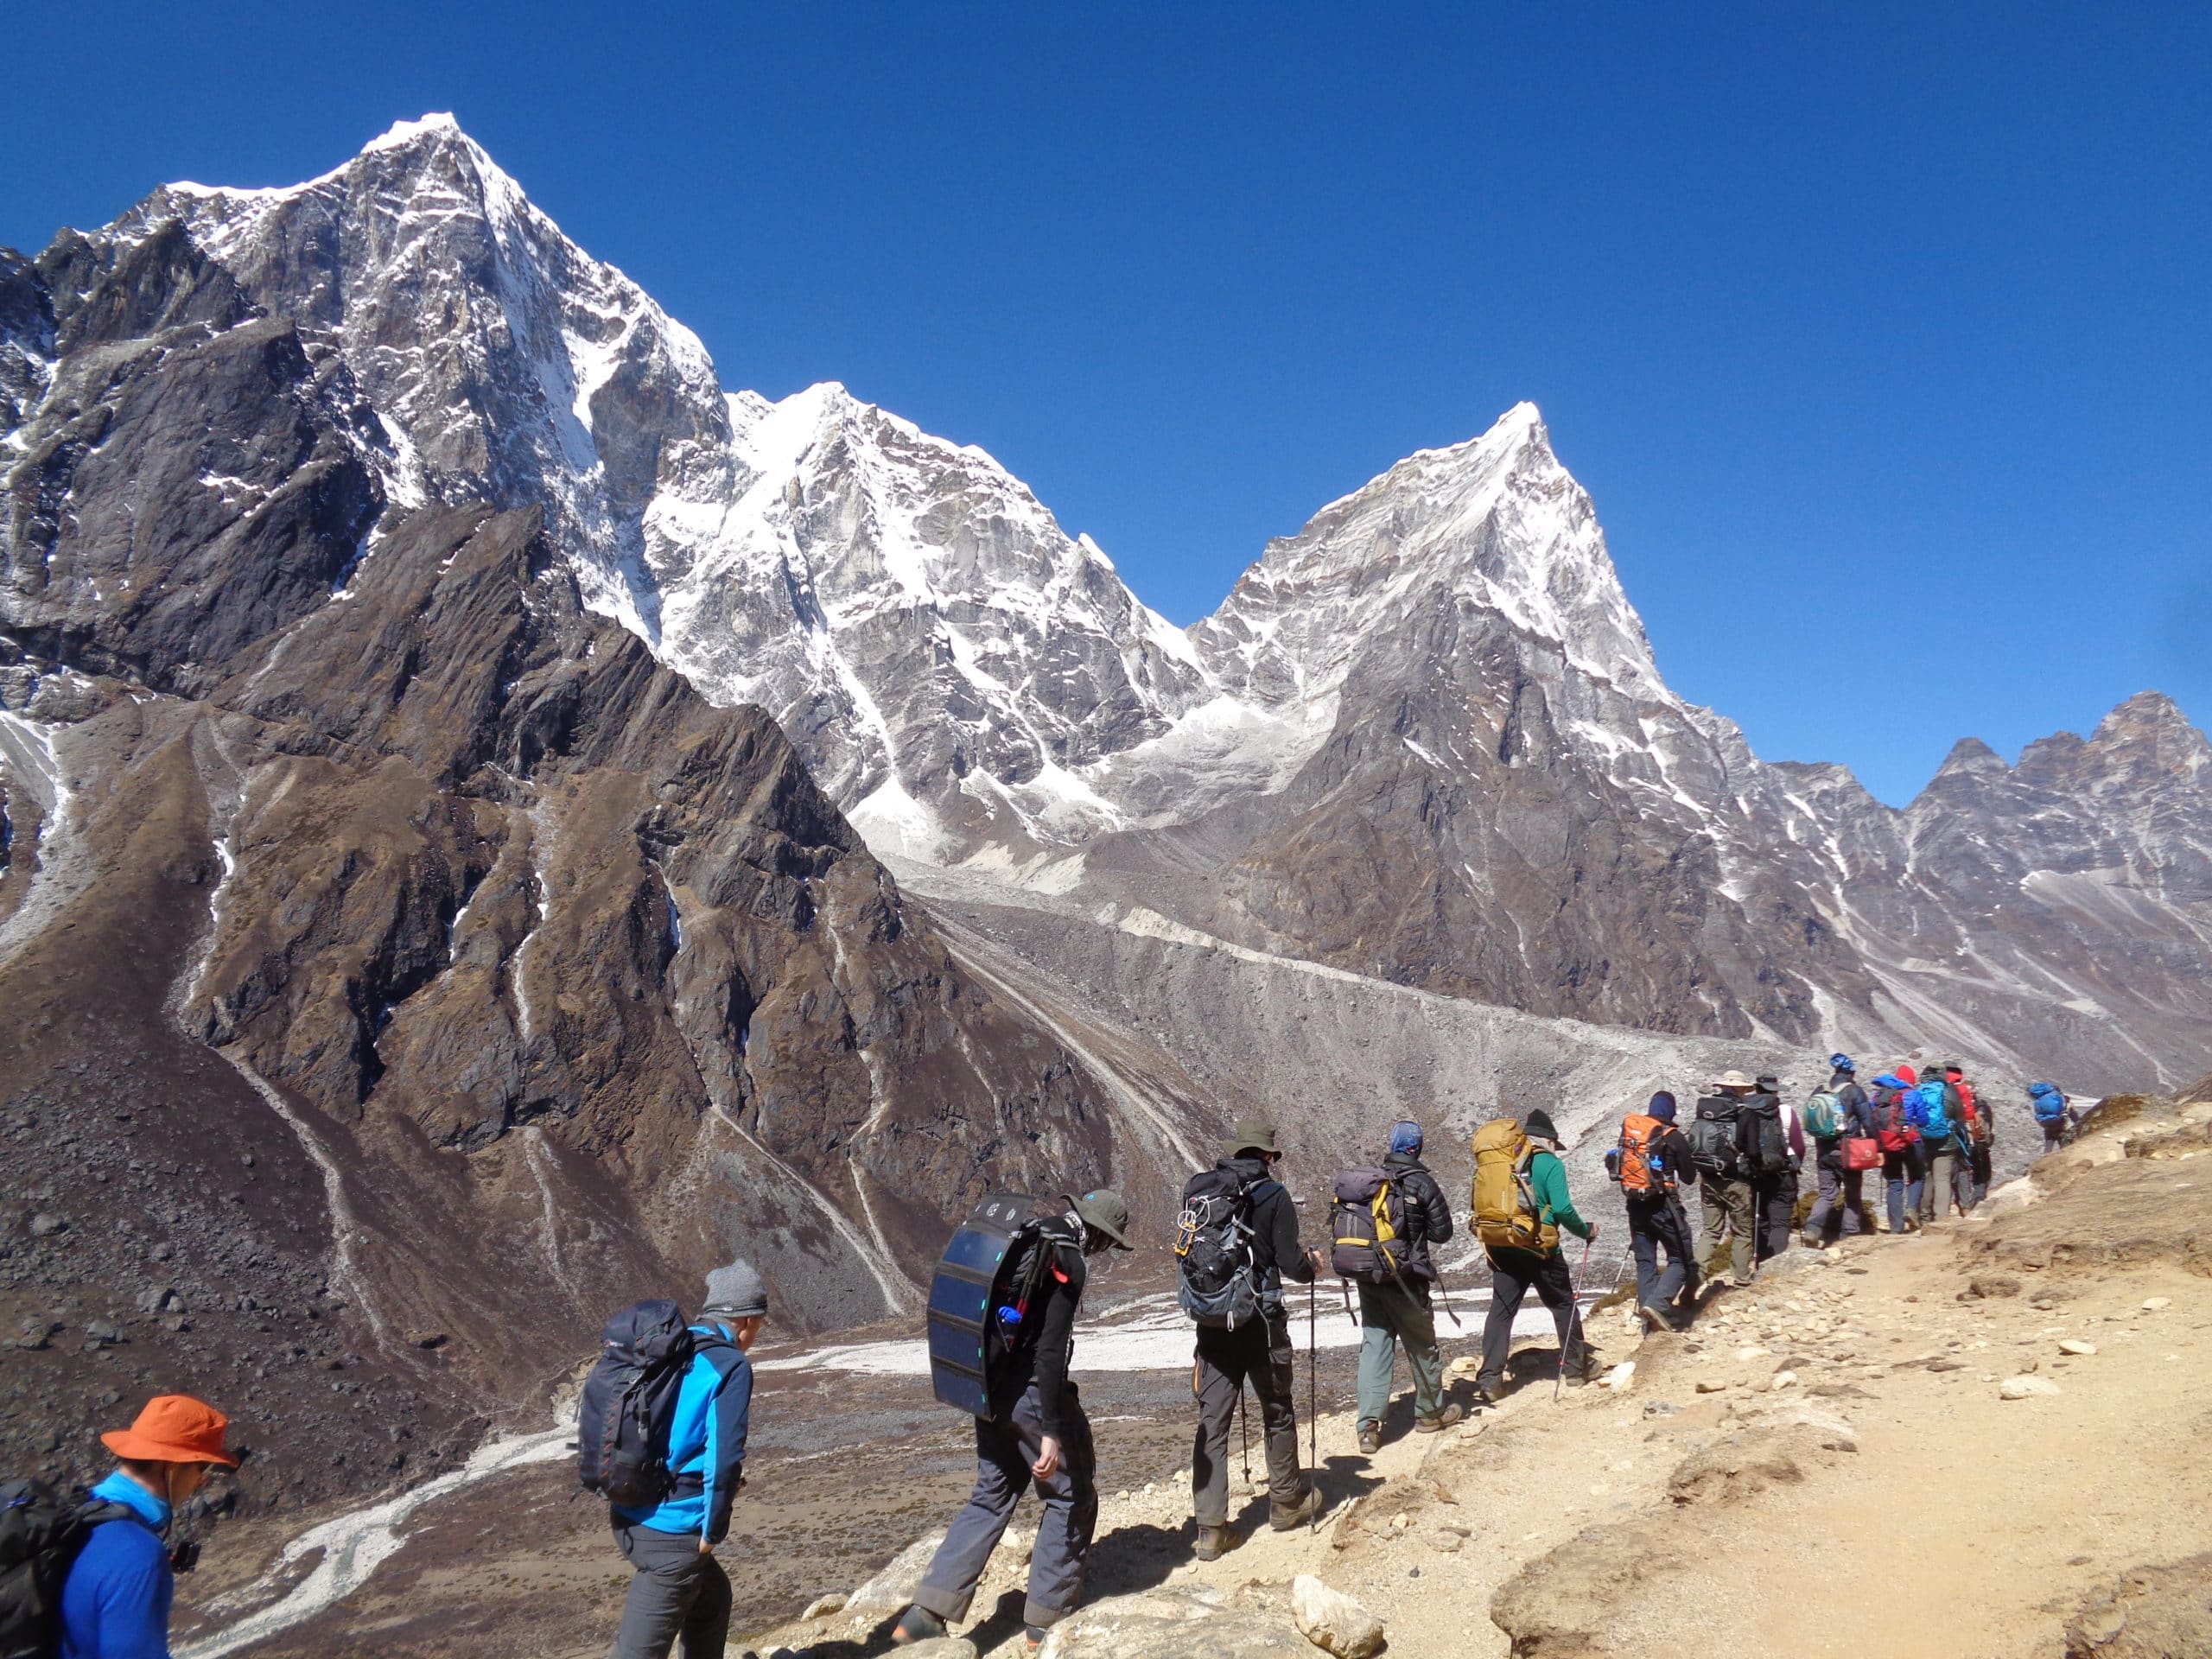 Article on the Everest base camp trek